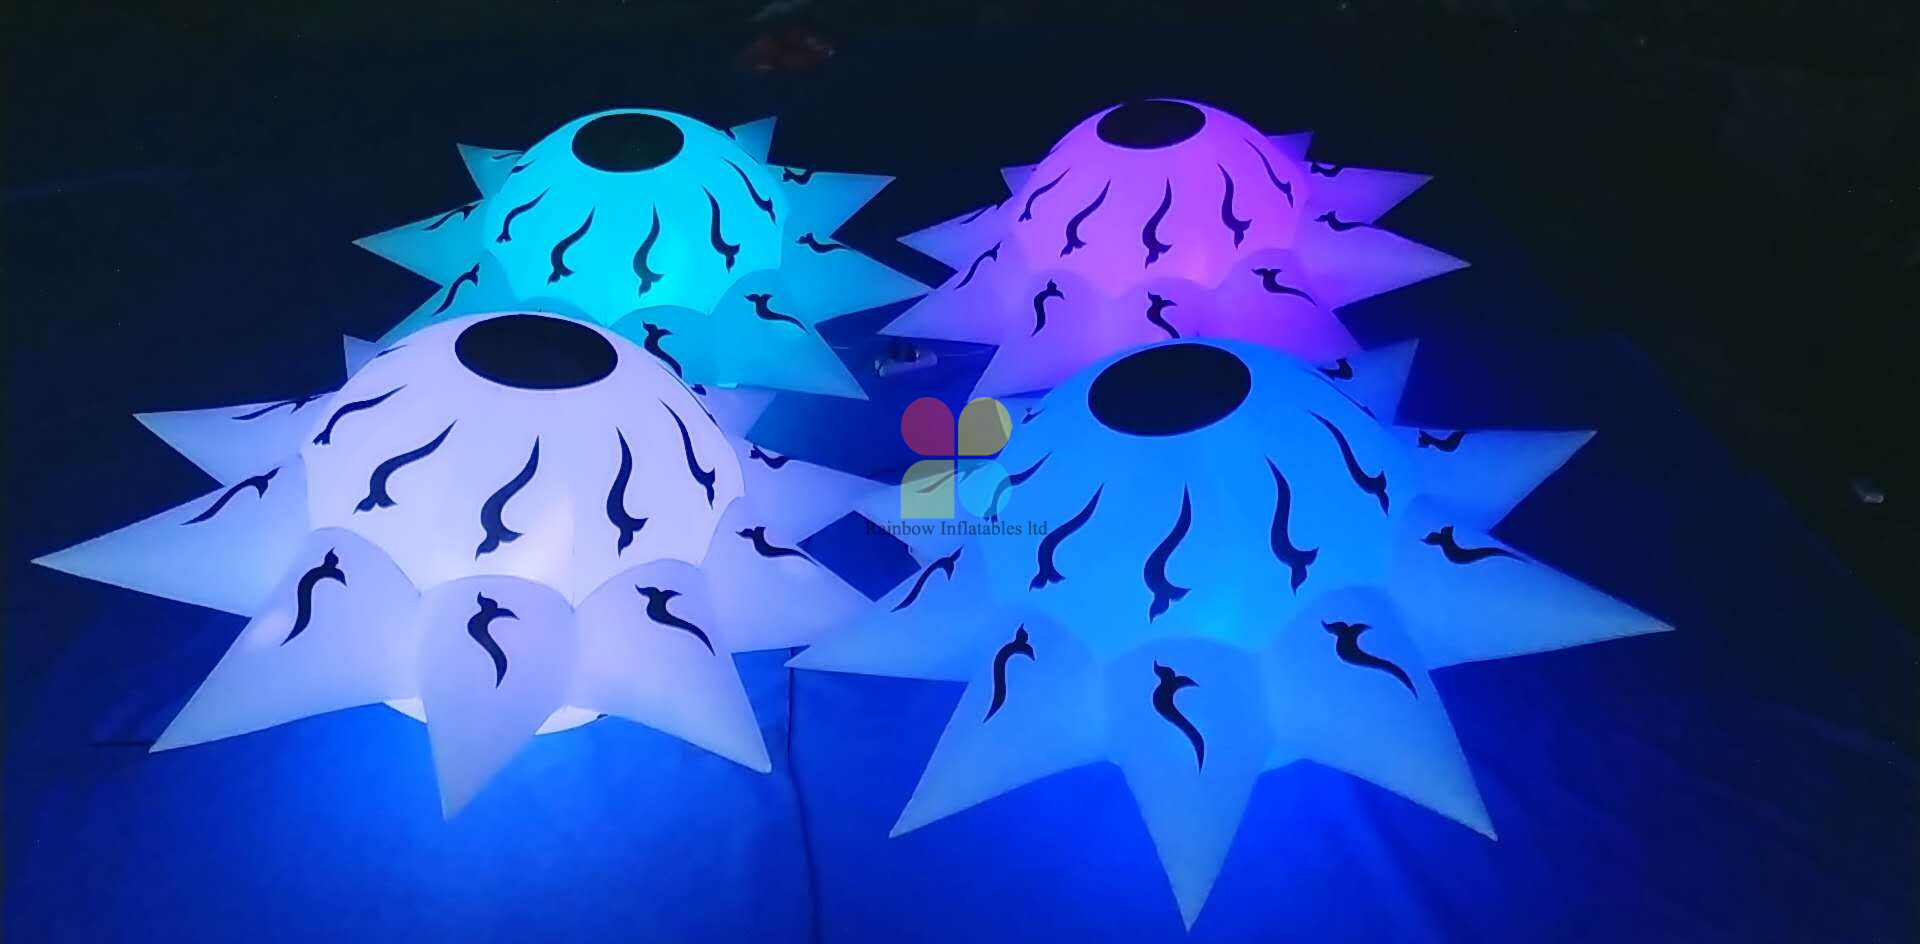  Led Light Decorative Inflatable